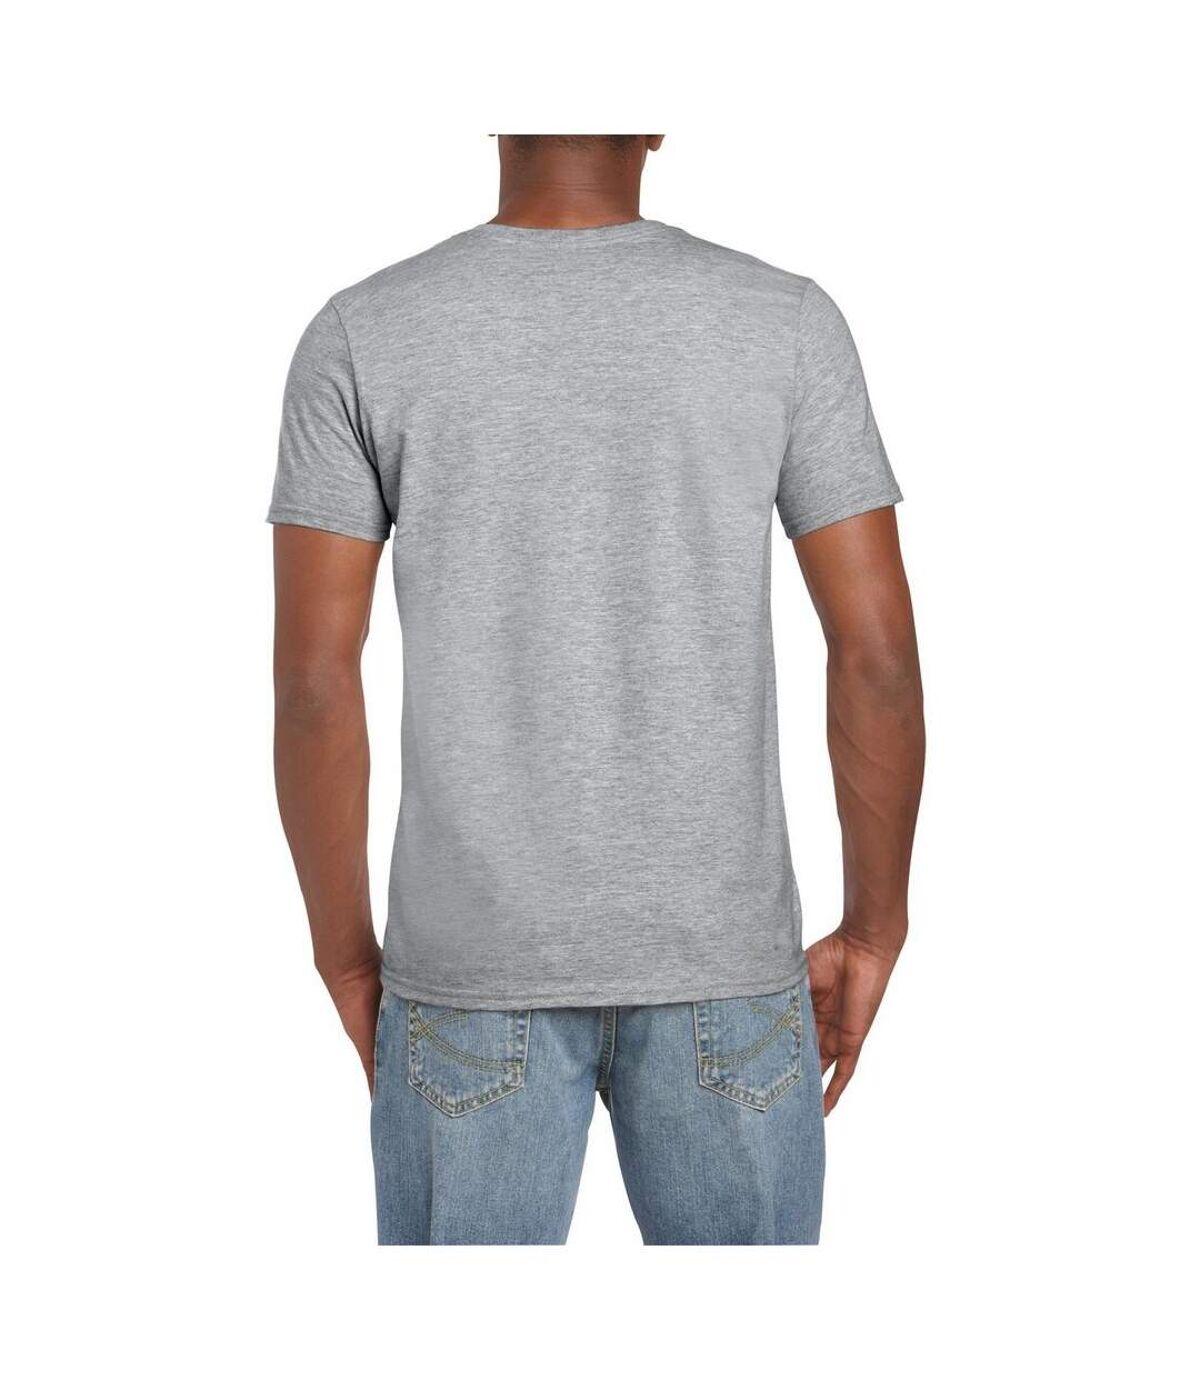 Gildan - T-shirt manches courtes - Homme (Bleu roi) - UTRW3659